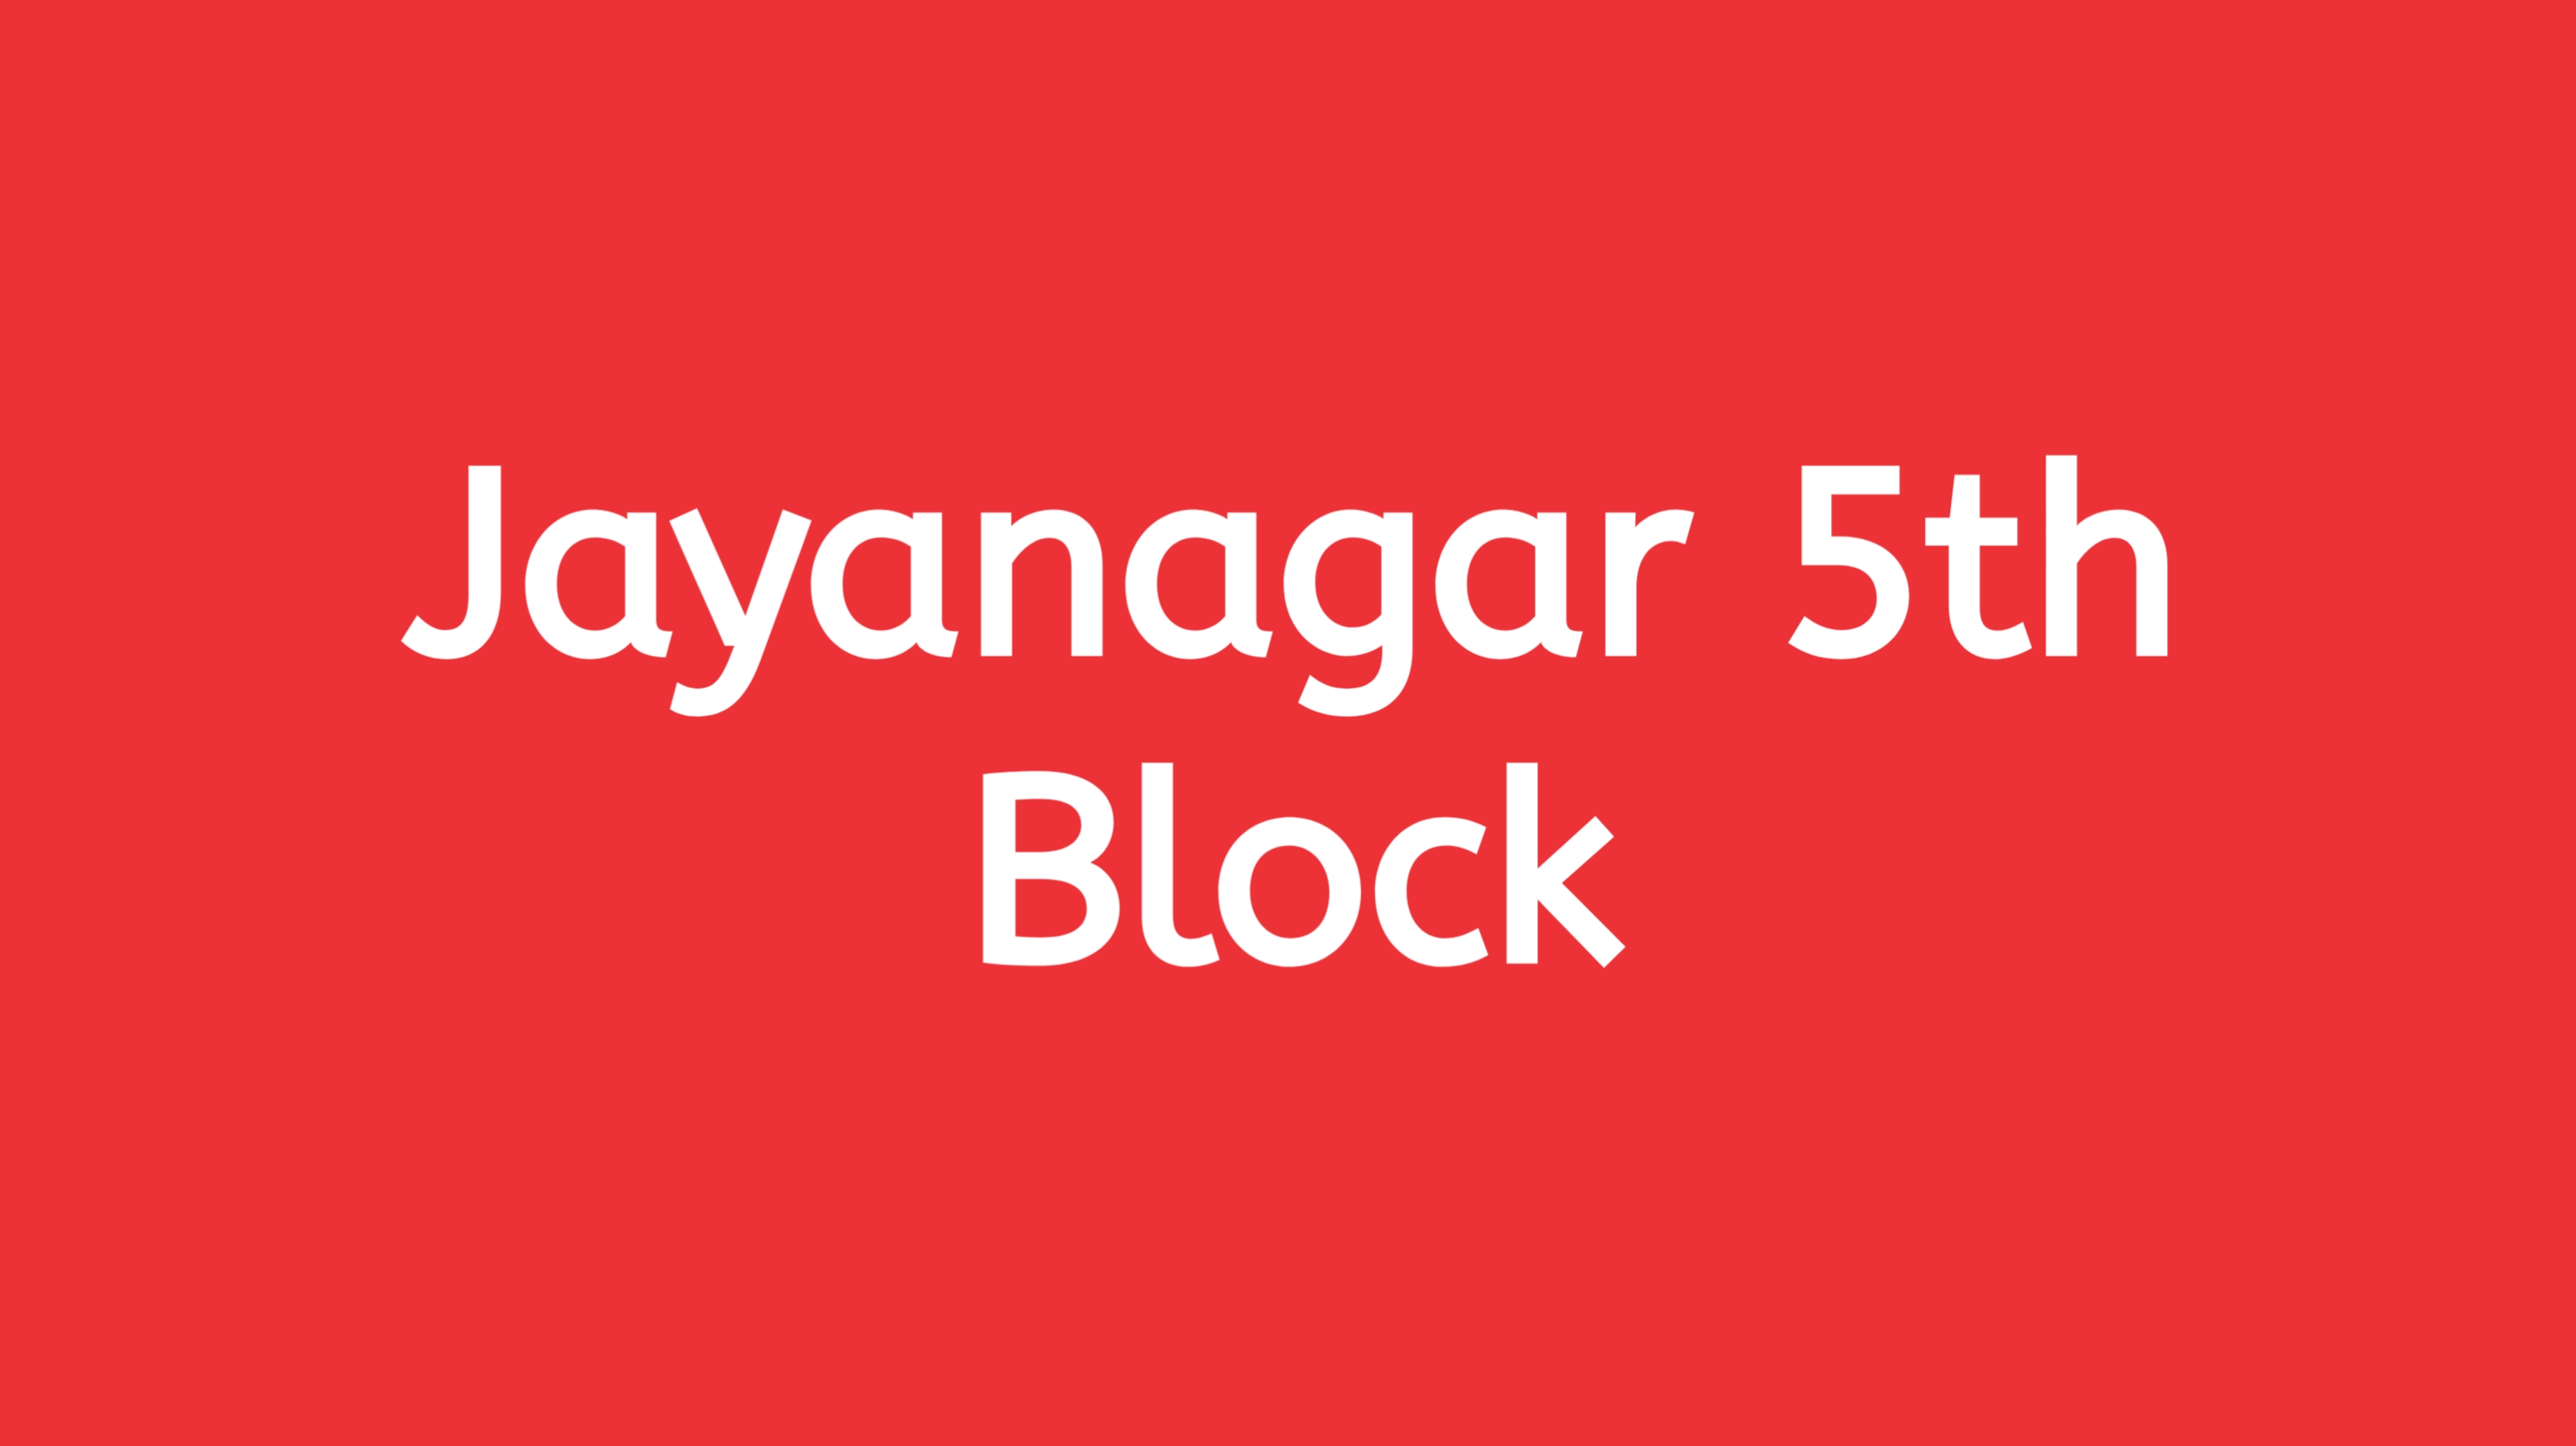 StayFit -Jayanagar 5th Block